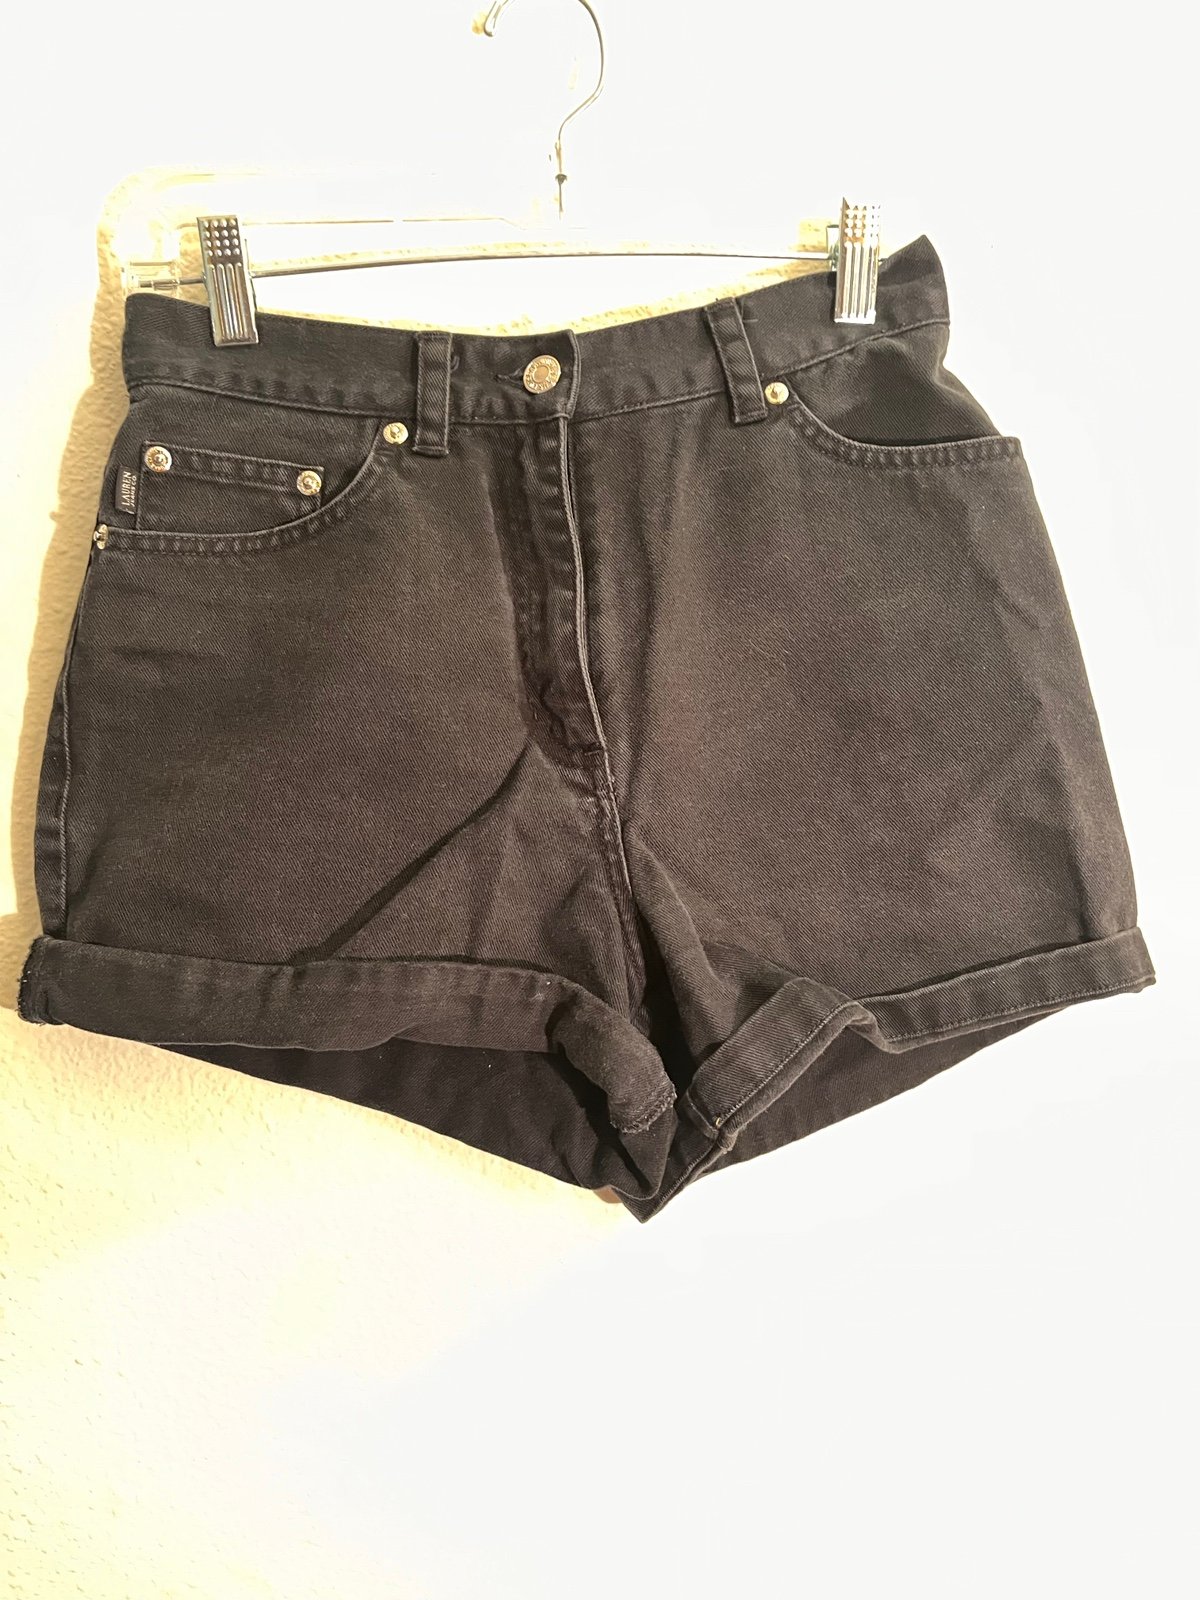 Gorgeous Ralph Lauren Vintage Jean Shorts PIjrJu162 all for you